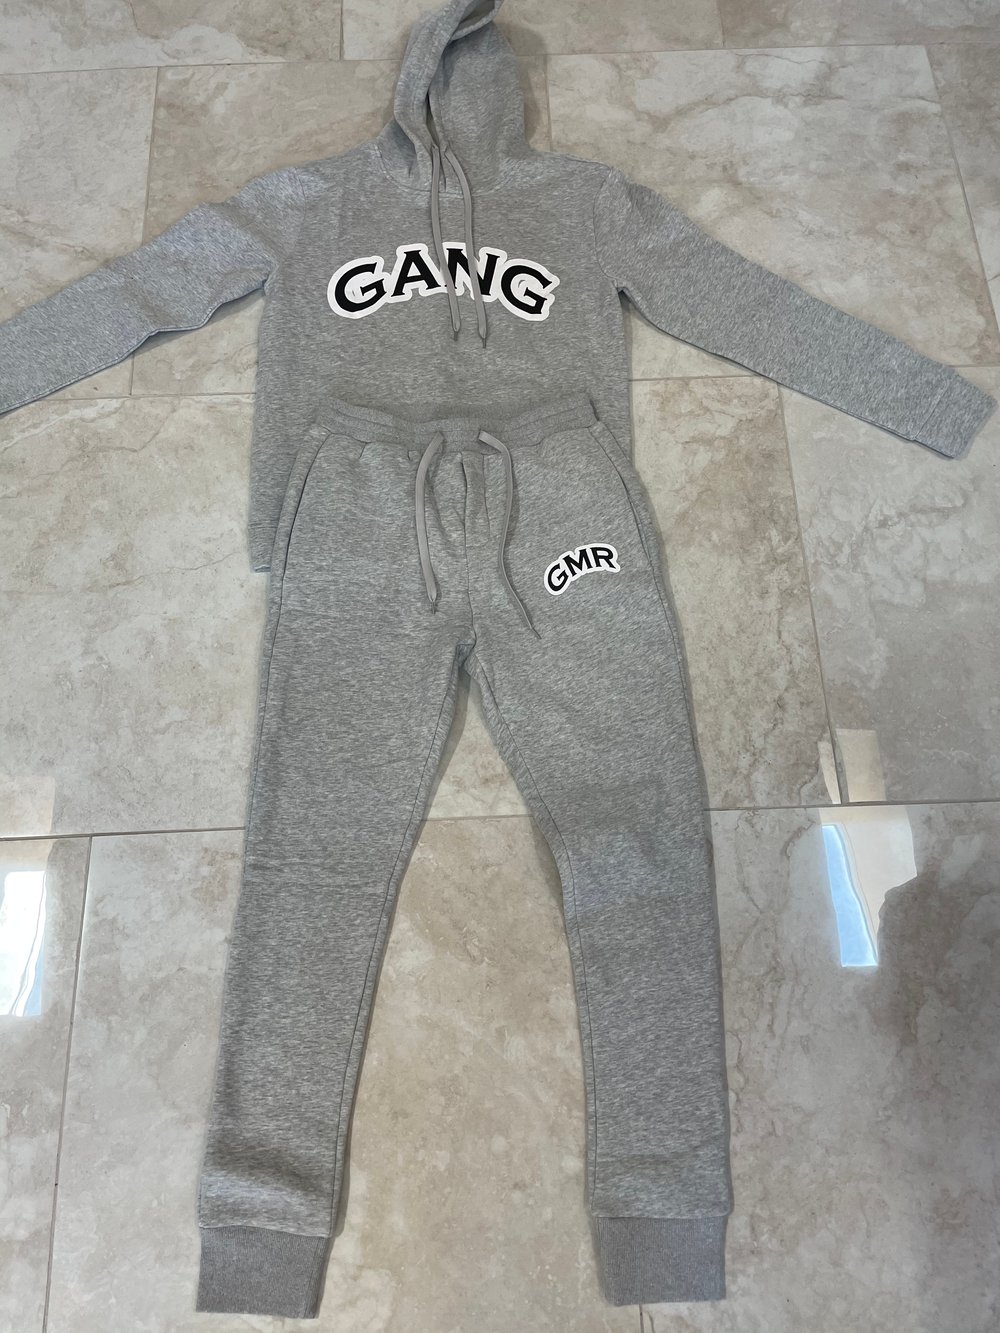 GMR ‘Gang’ Sweatsuit 